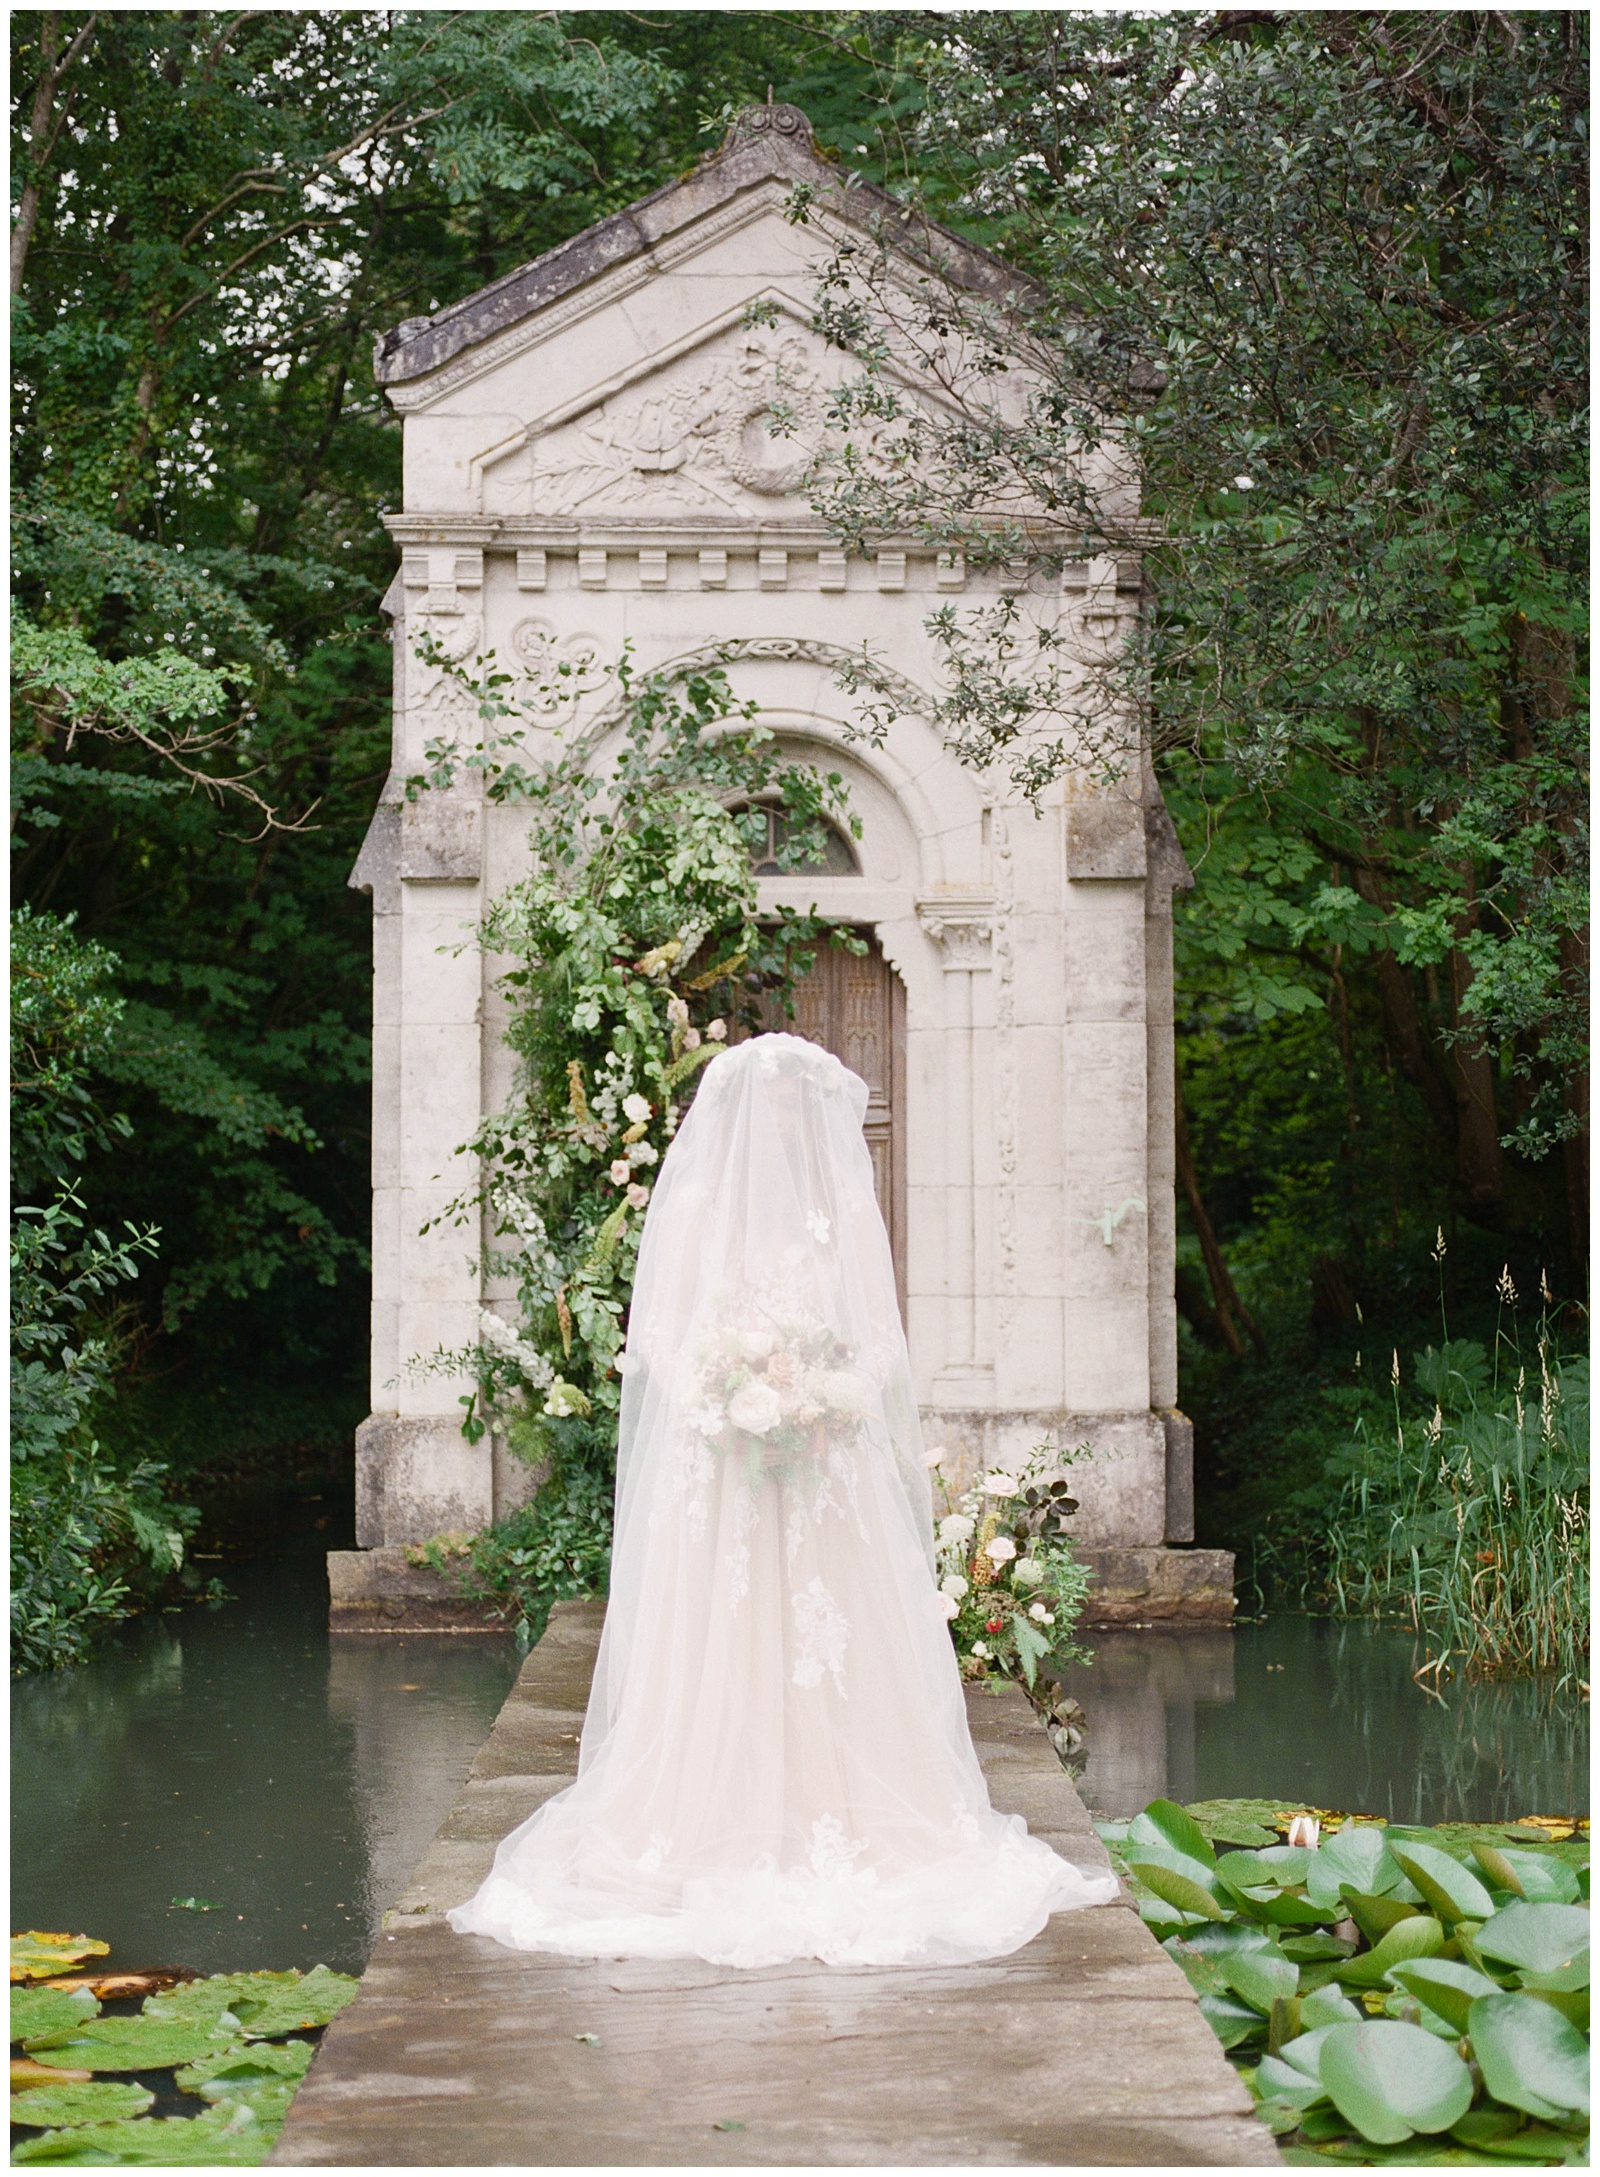 Destination Wedding Photographer | Ireland Destination Wedding Photography | Cliff at Lyons Wedding Photography | Sarah Sunstrom Photography_0030.jpg